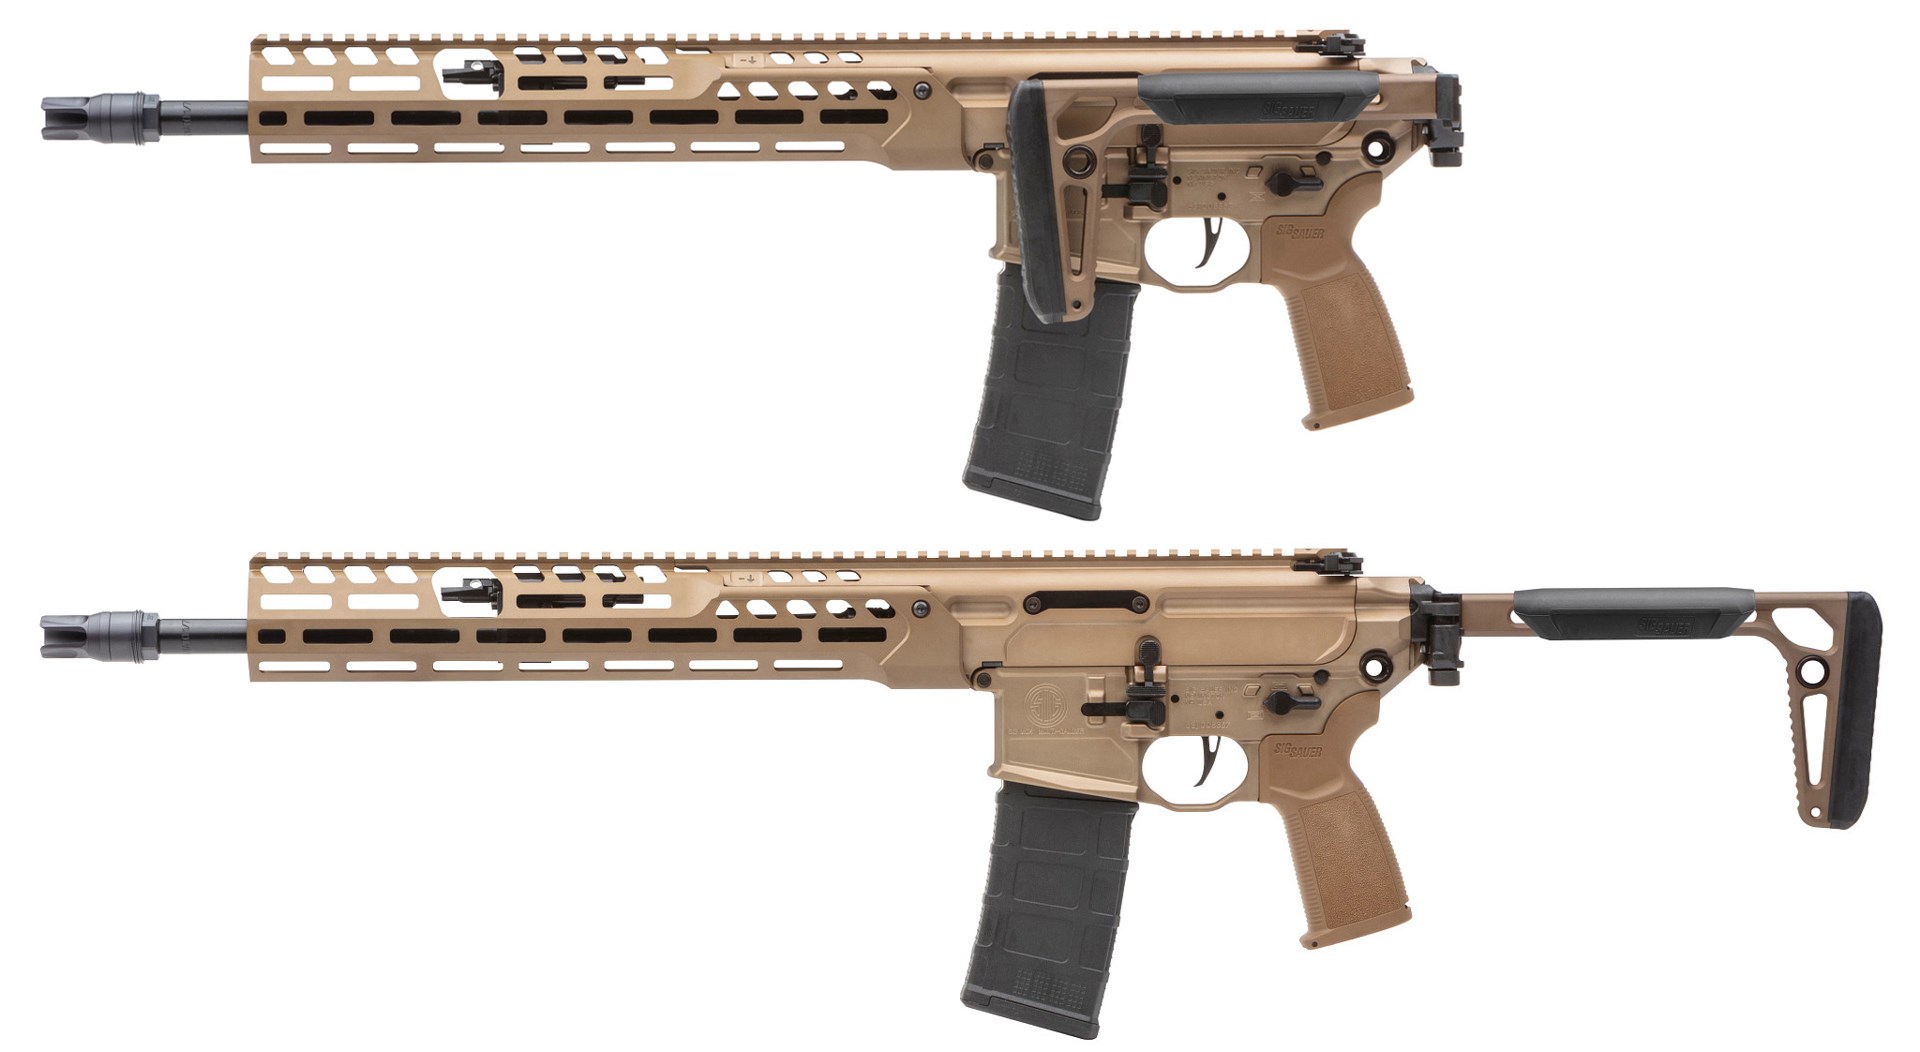 two guns comparison top bottom sig sauer mcx spear lt rifle carbine brown color gun left side view on white